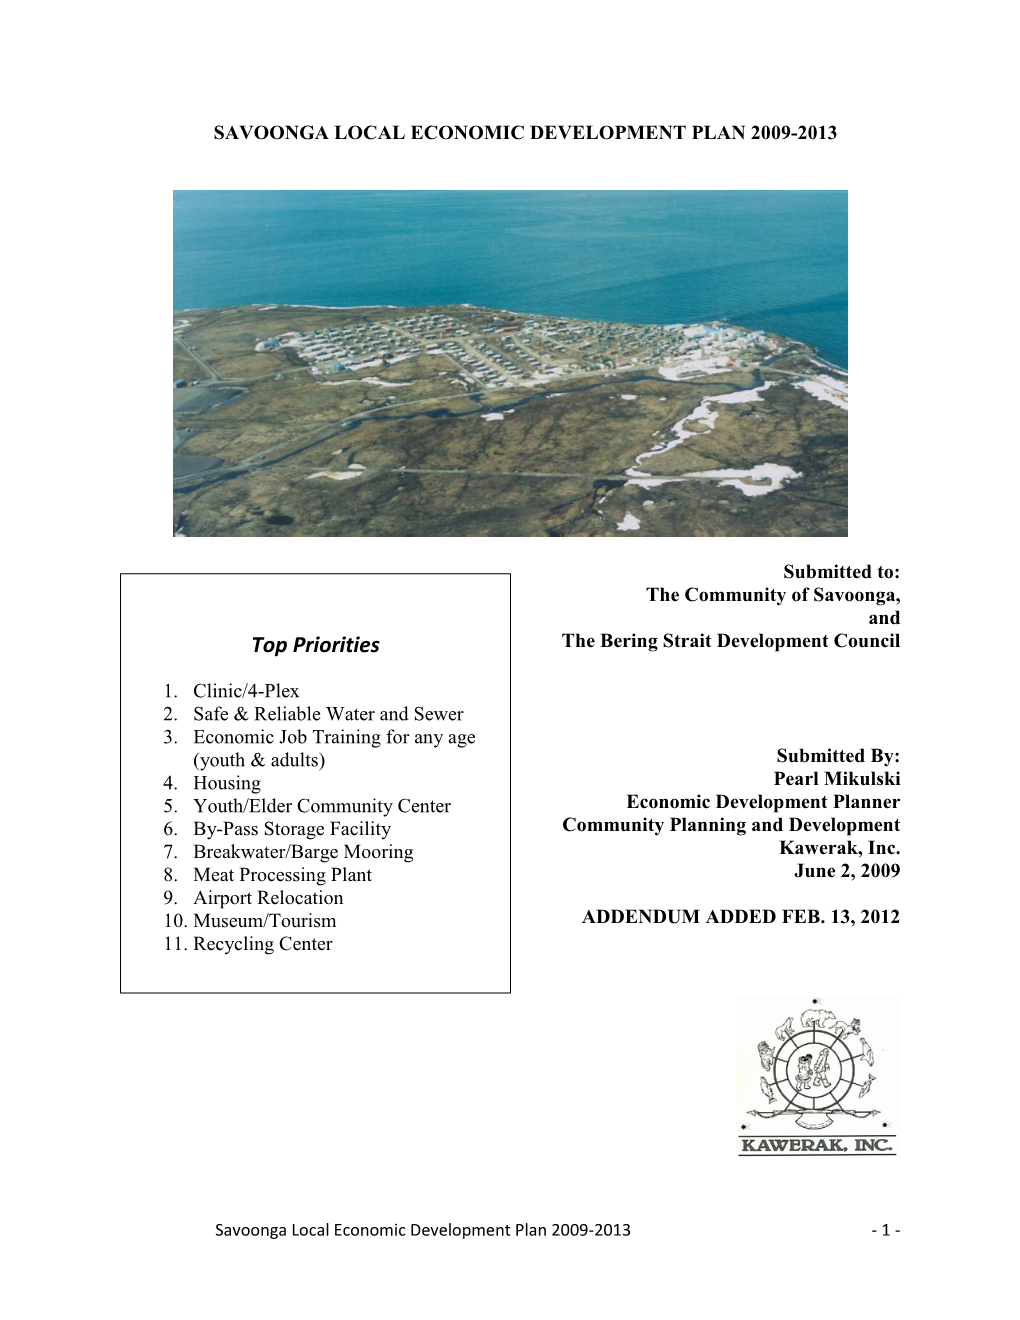 Savoonga Local Economic Development Plan 2009-2013